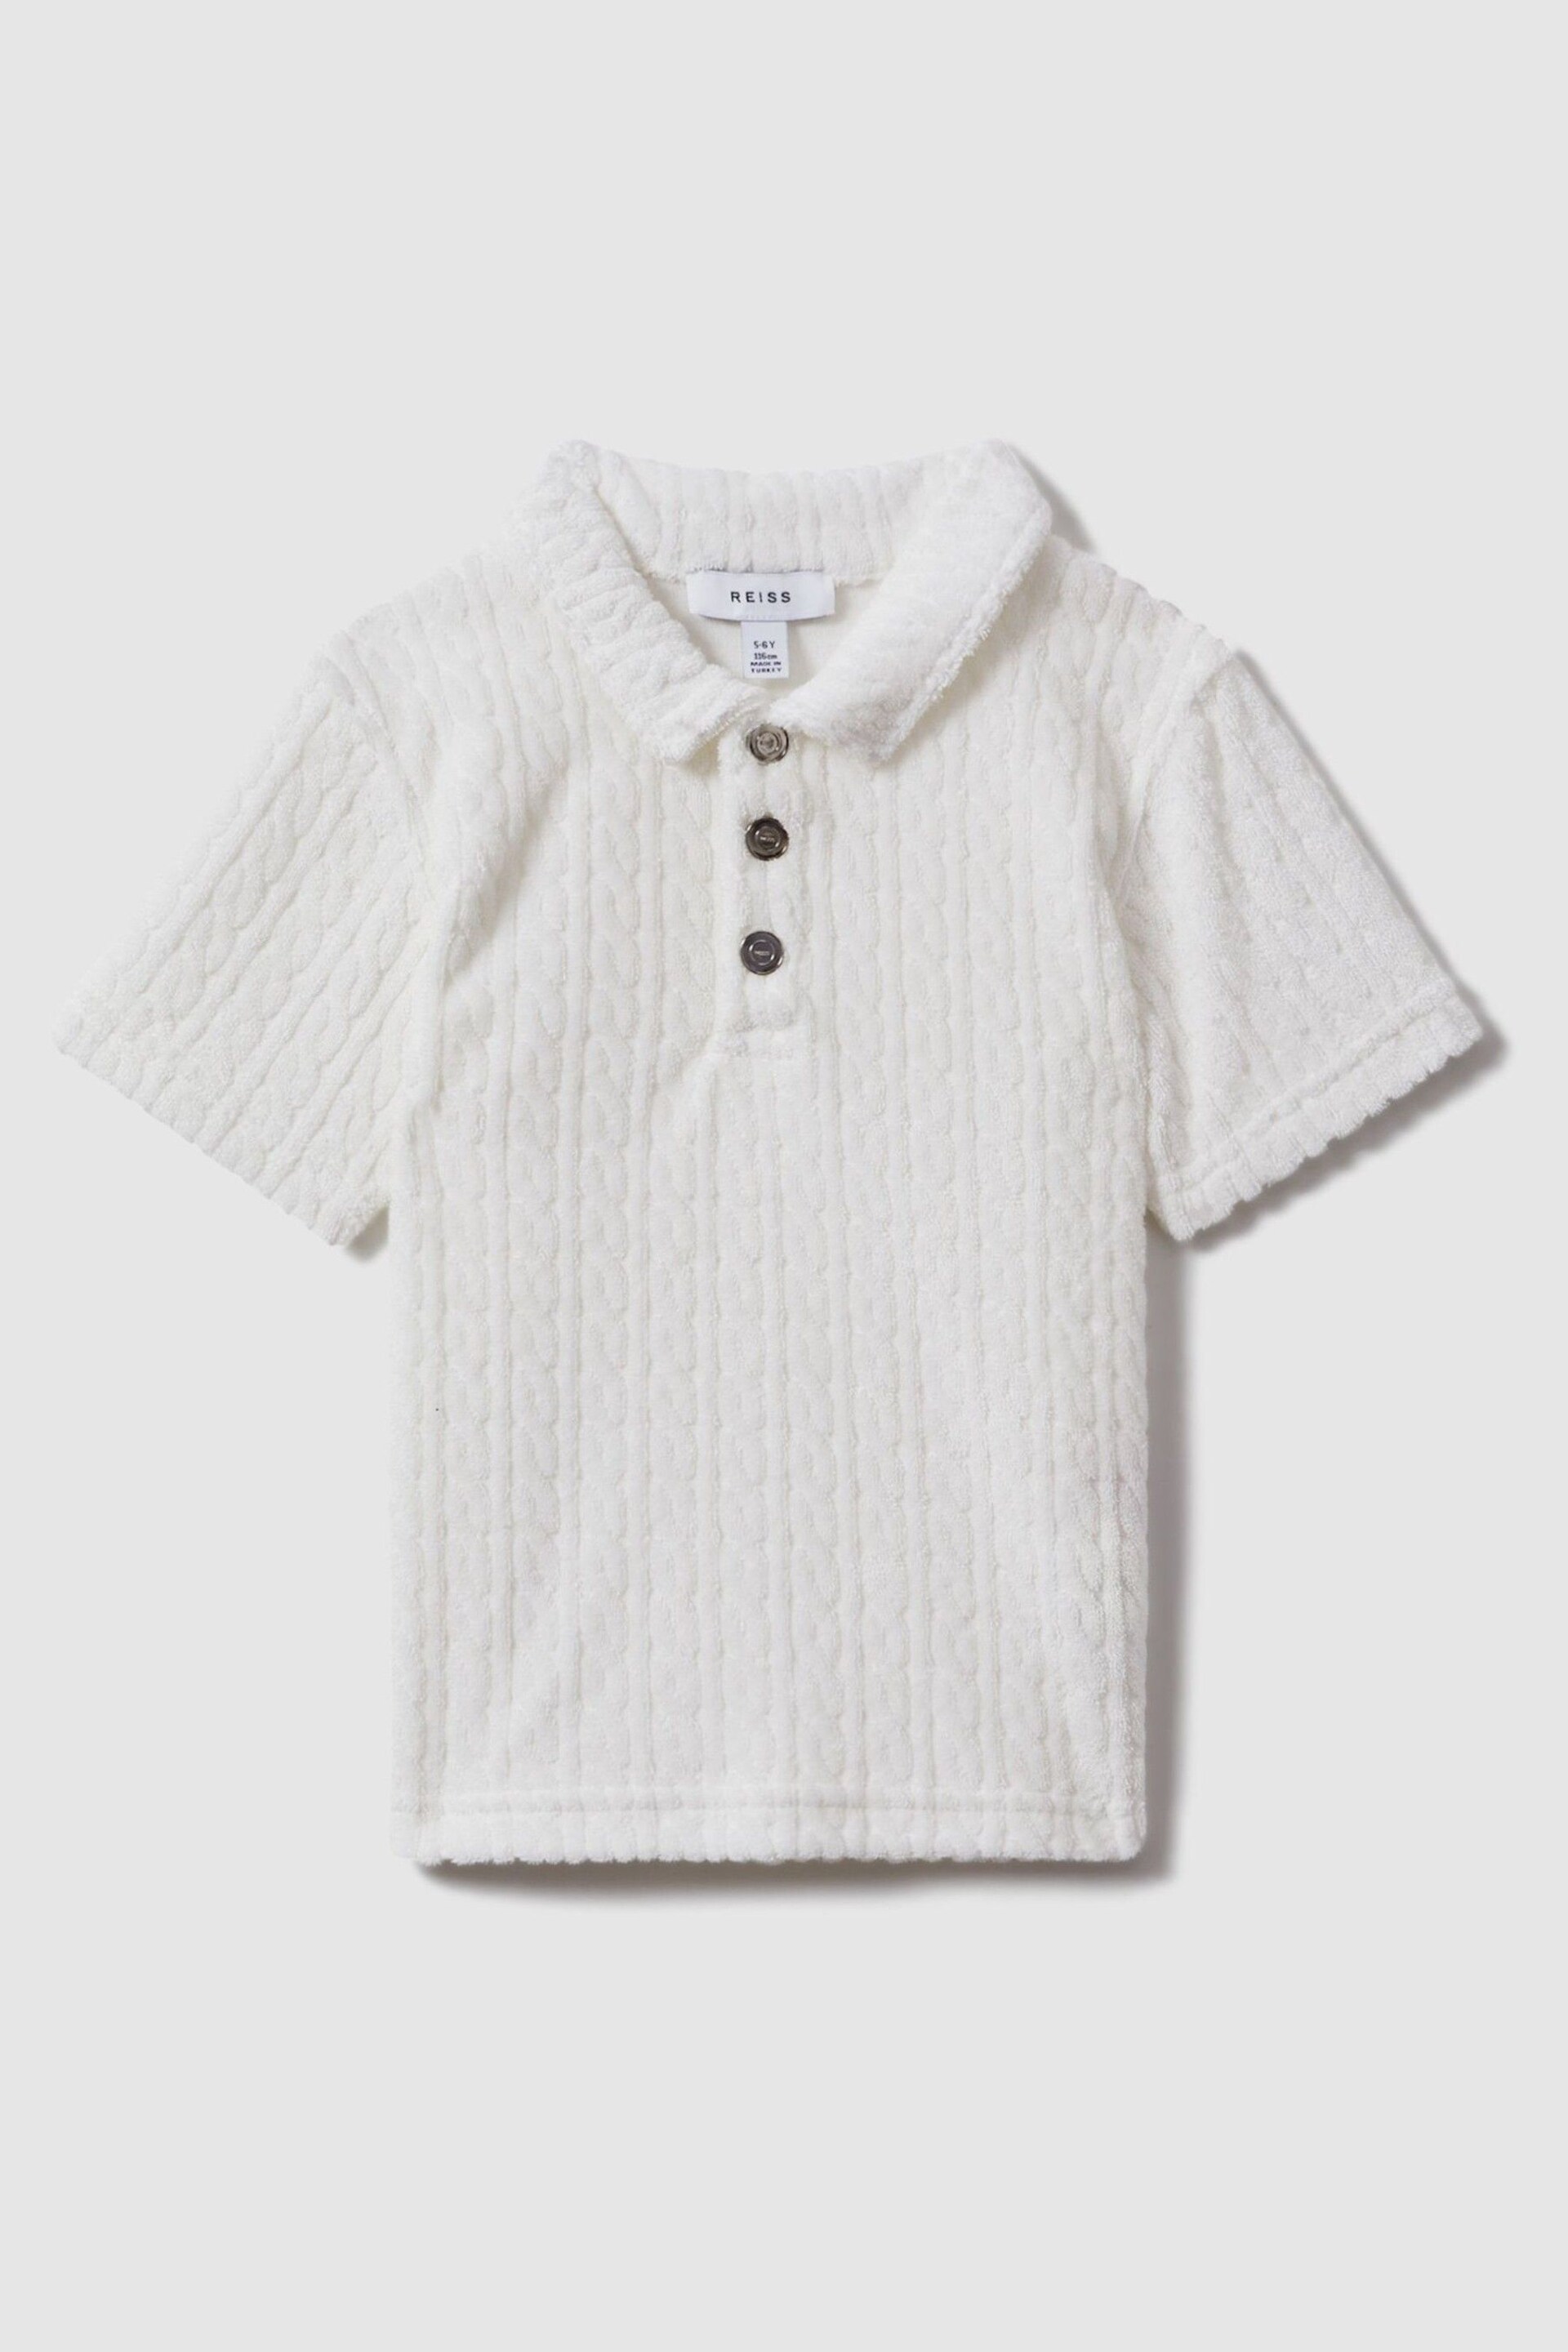 Reiss White Iggy Teen Towelling Polo Shirt - Image 1 of 4